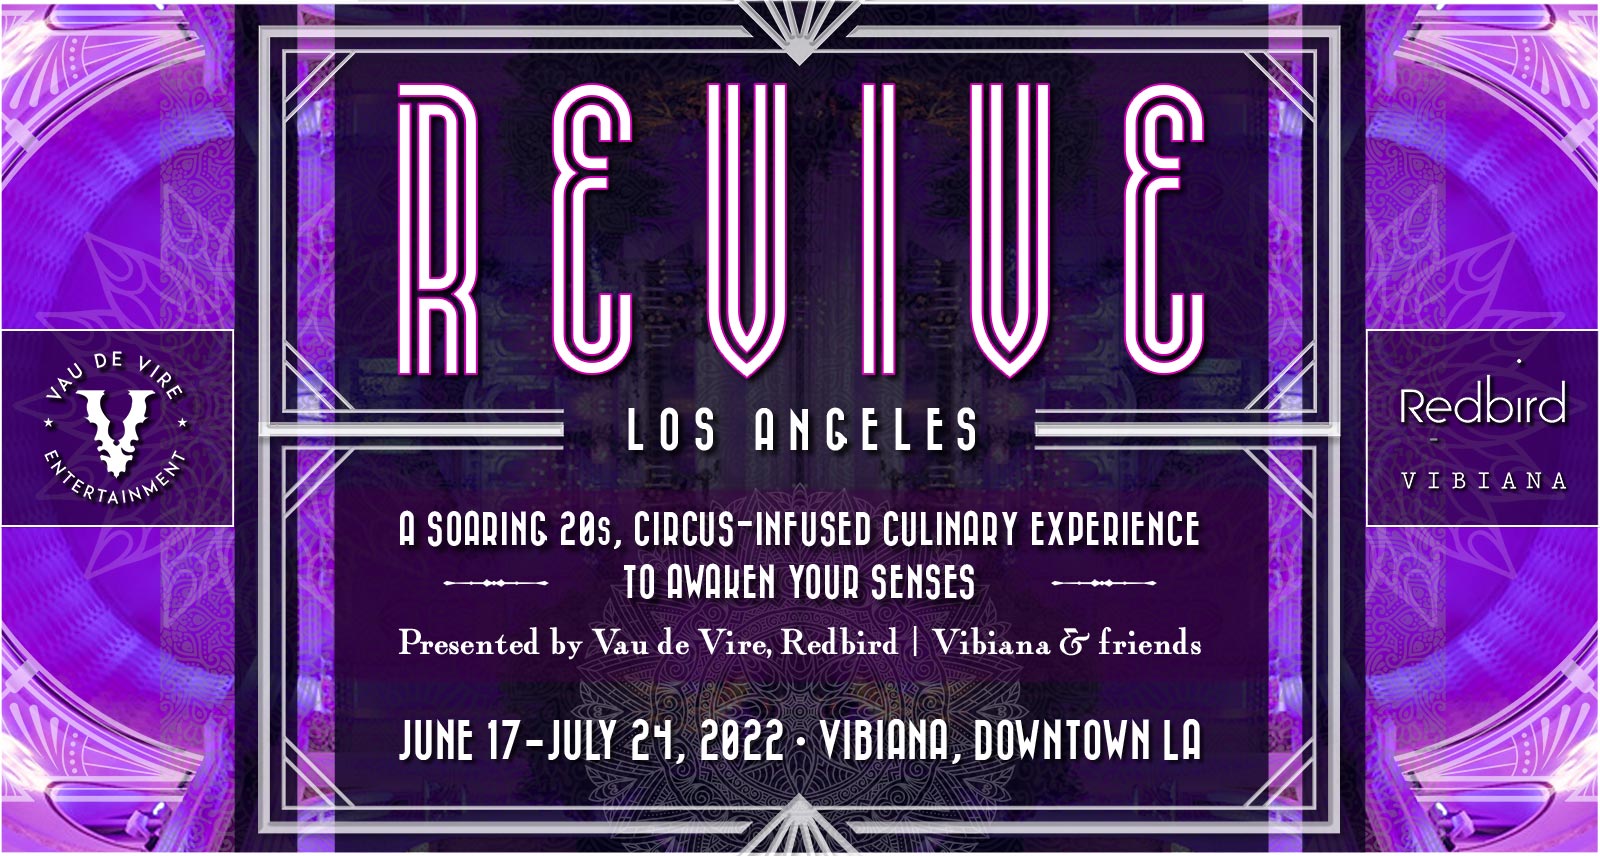 Vau de Vire & Redbird | Vibiana present REVIVE Los Angeles - June 17-July 24, 2022 - Vibiana, downtown Los Angeles